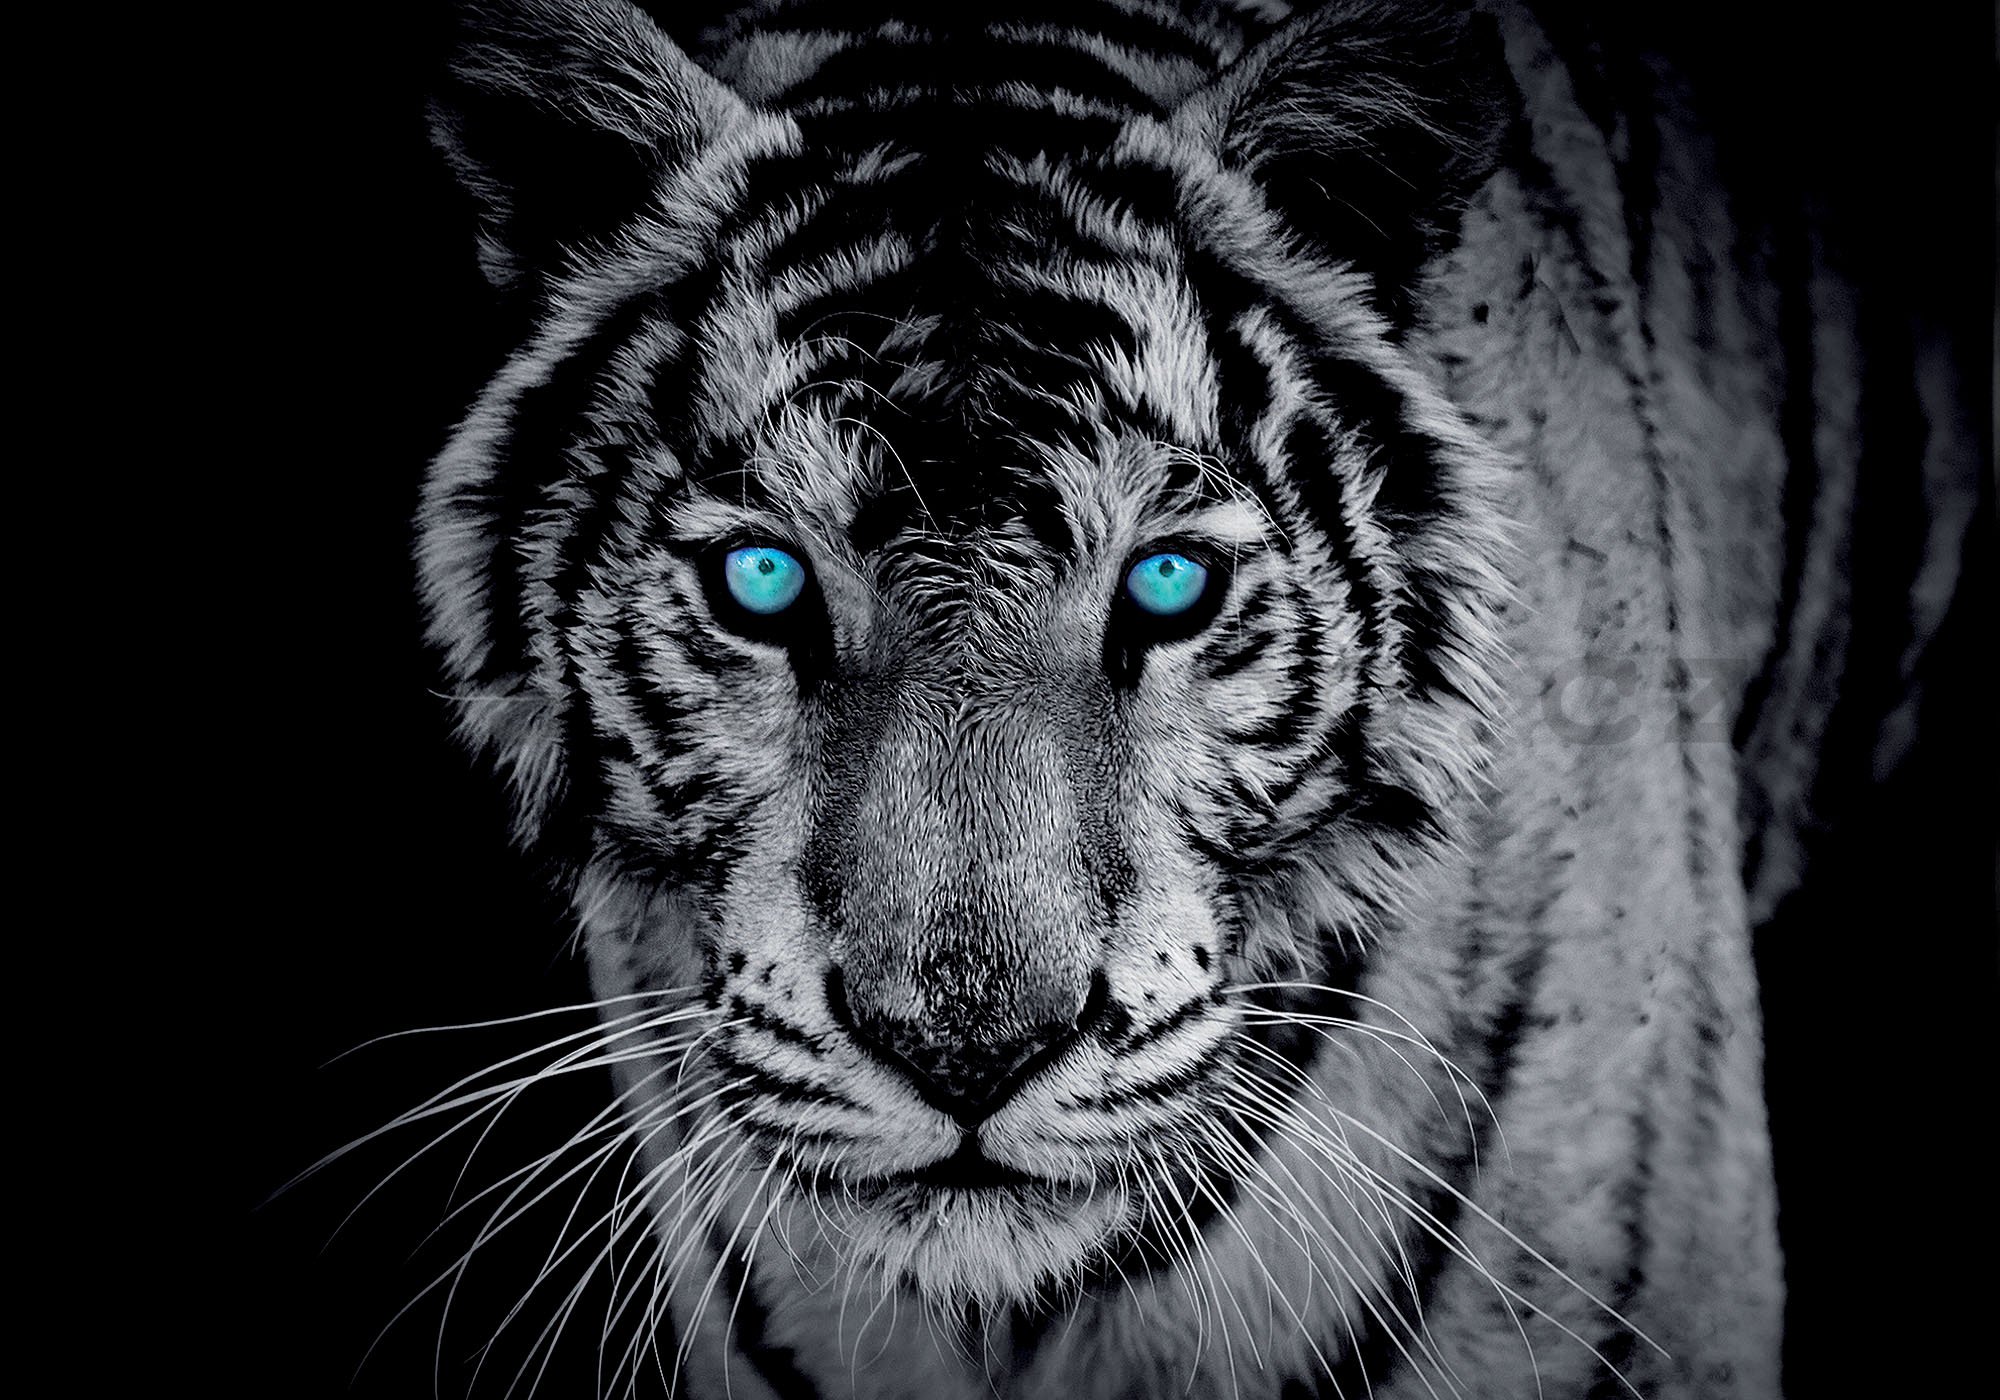 Fototapeta: Černobílý tygr - 254x368 cm